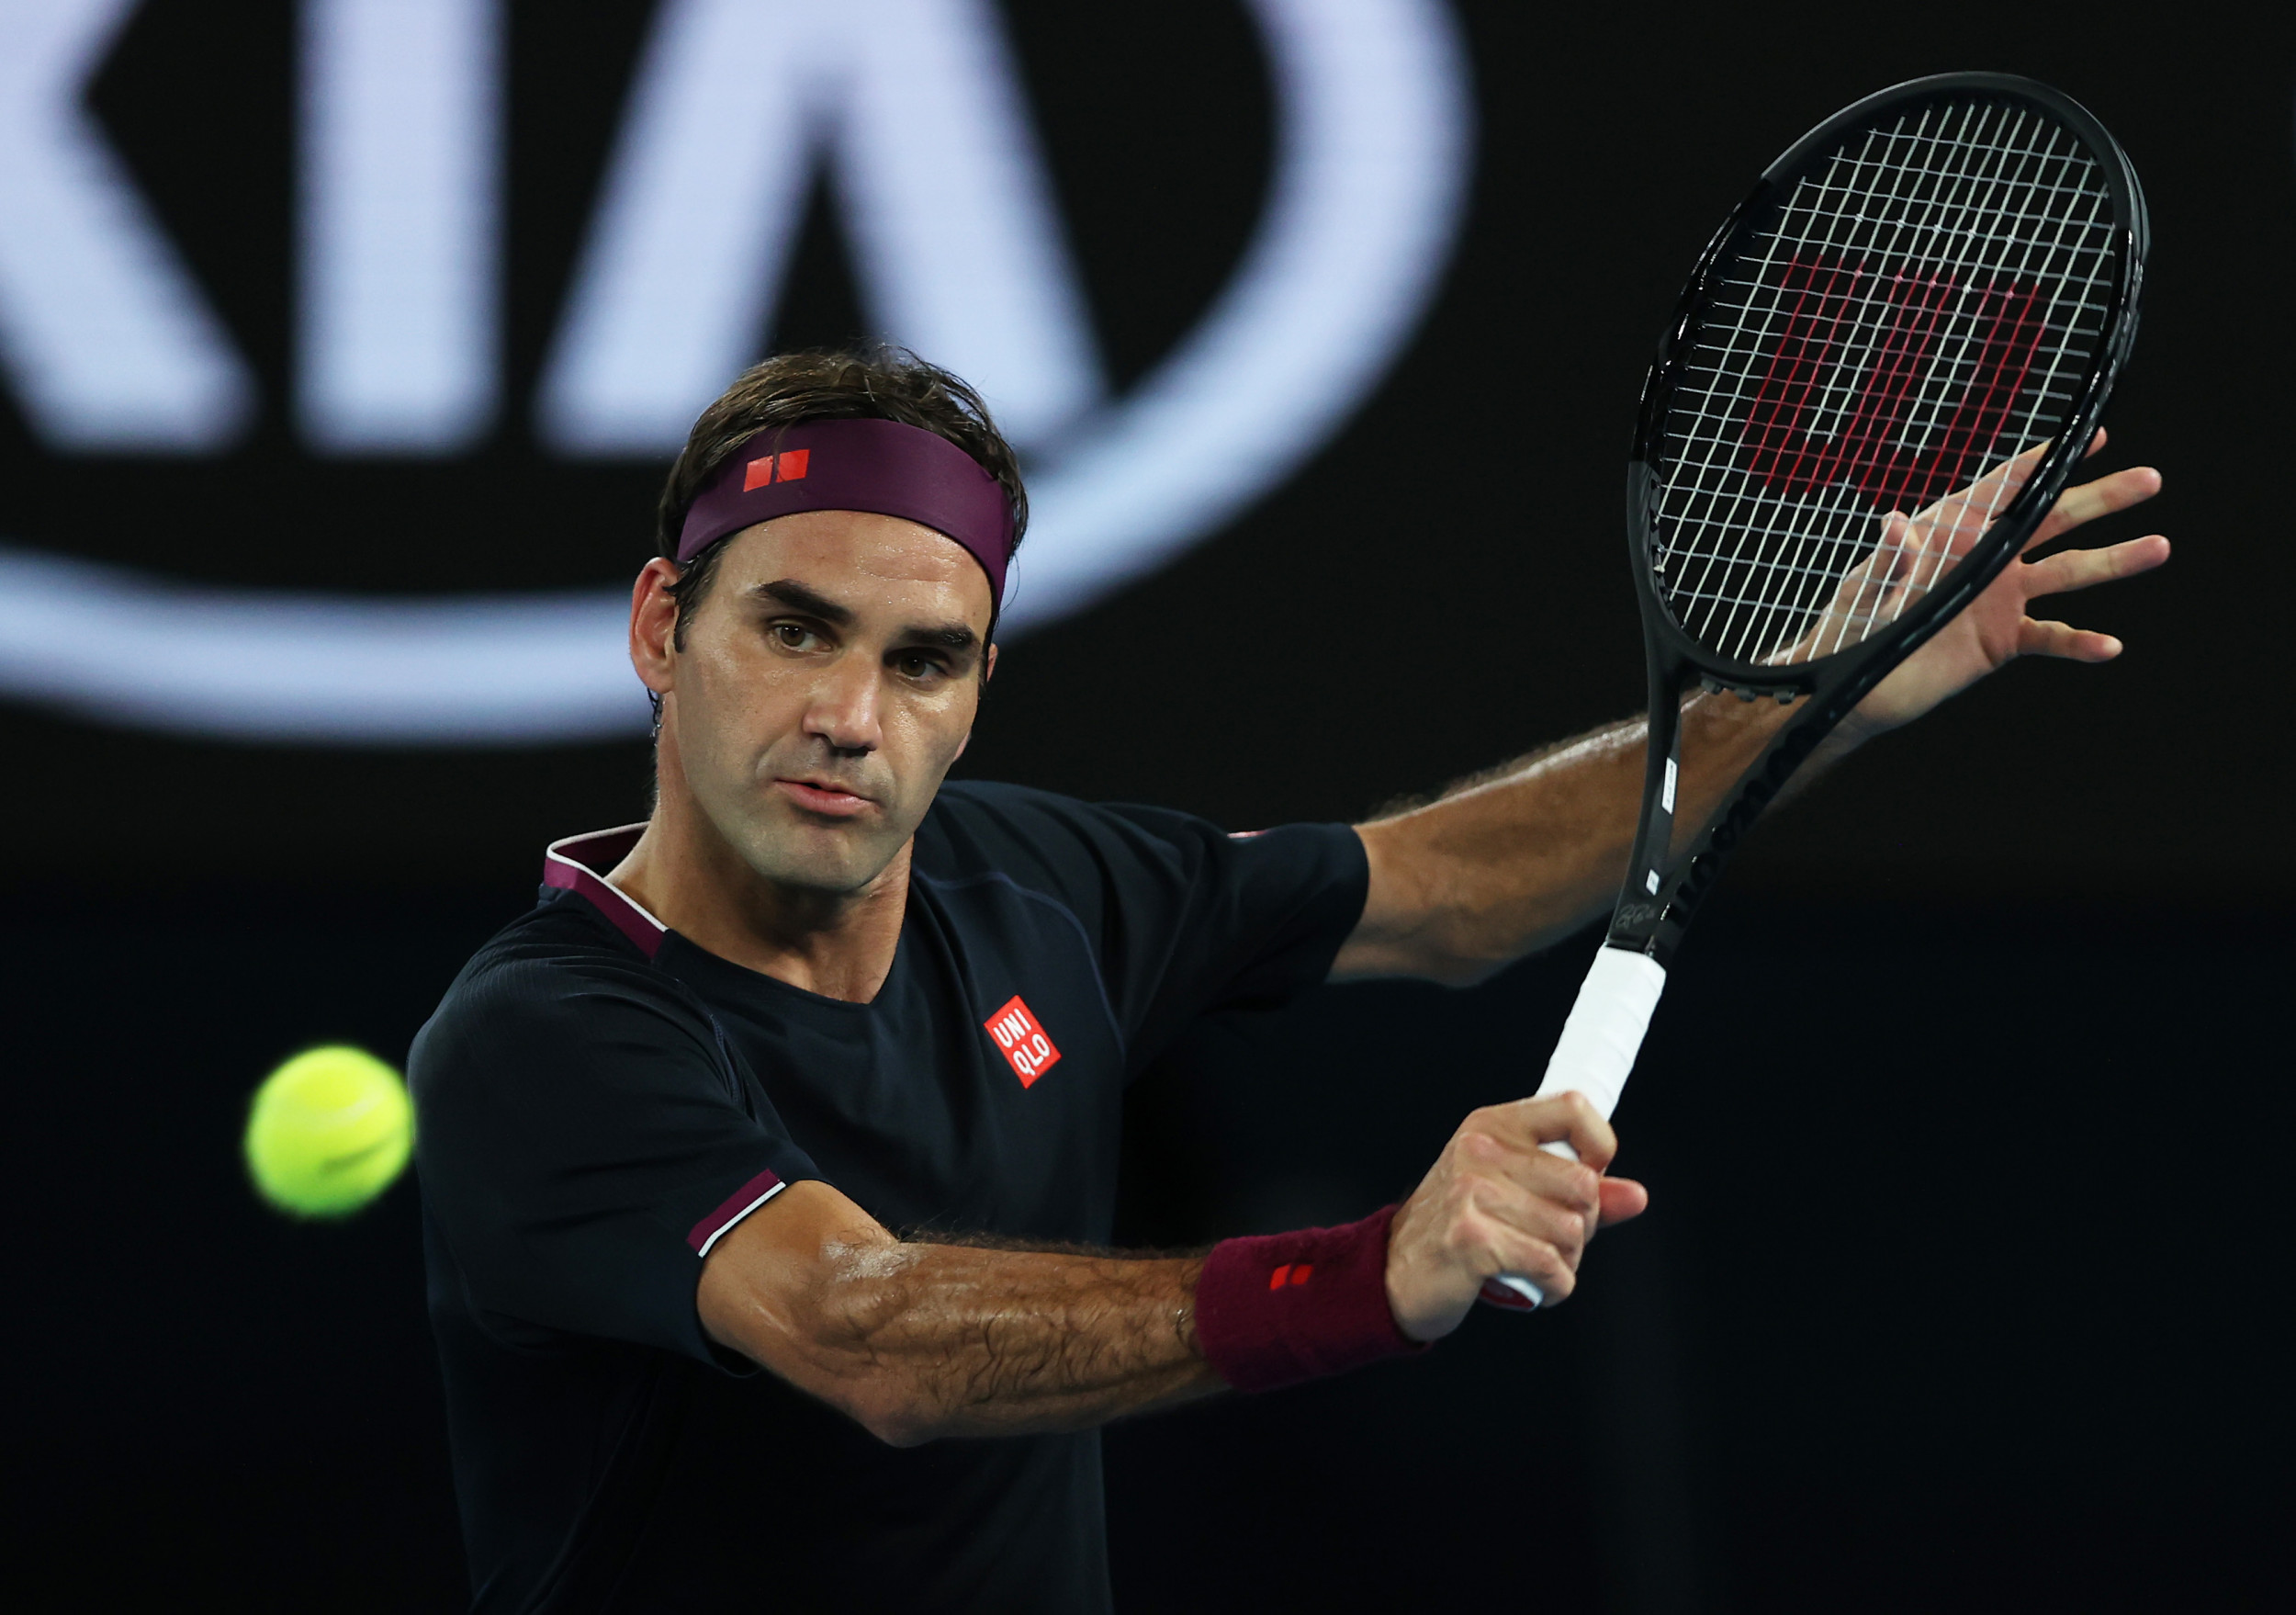 2020 Australian Open How to Watch Serena Williams, Roger Federer, Novak Djokovic Third-round Matches, Start times, Live Stream